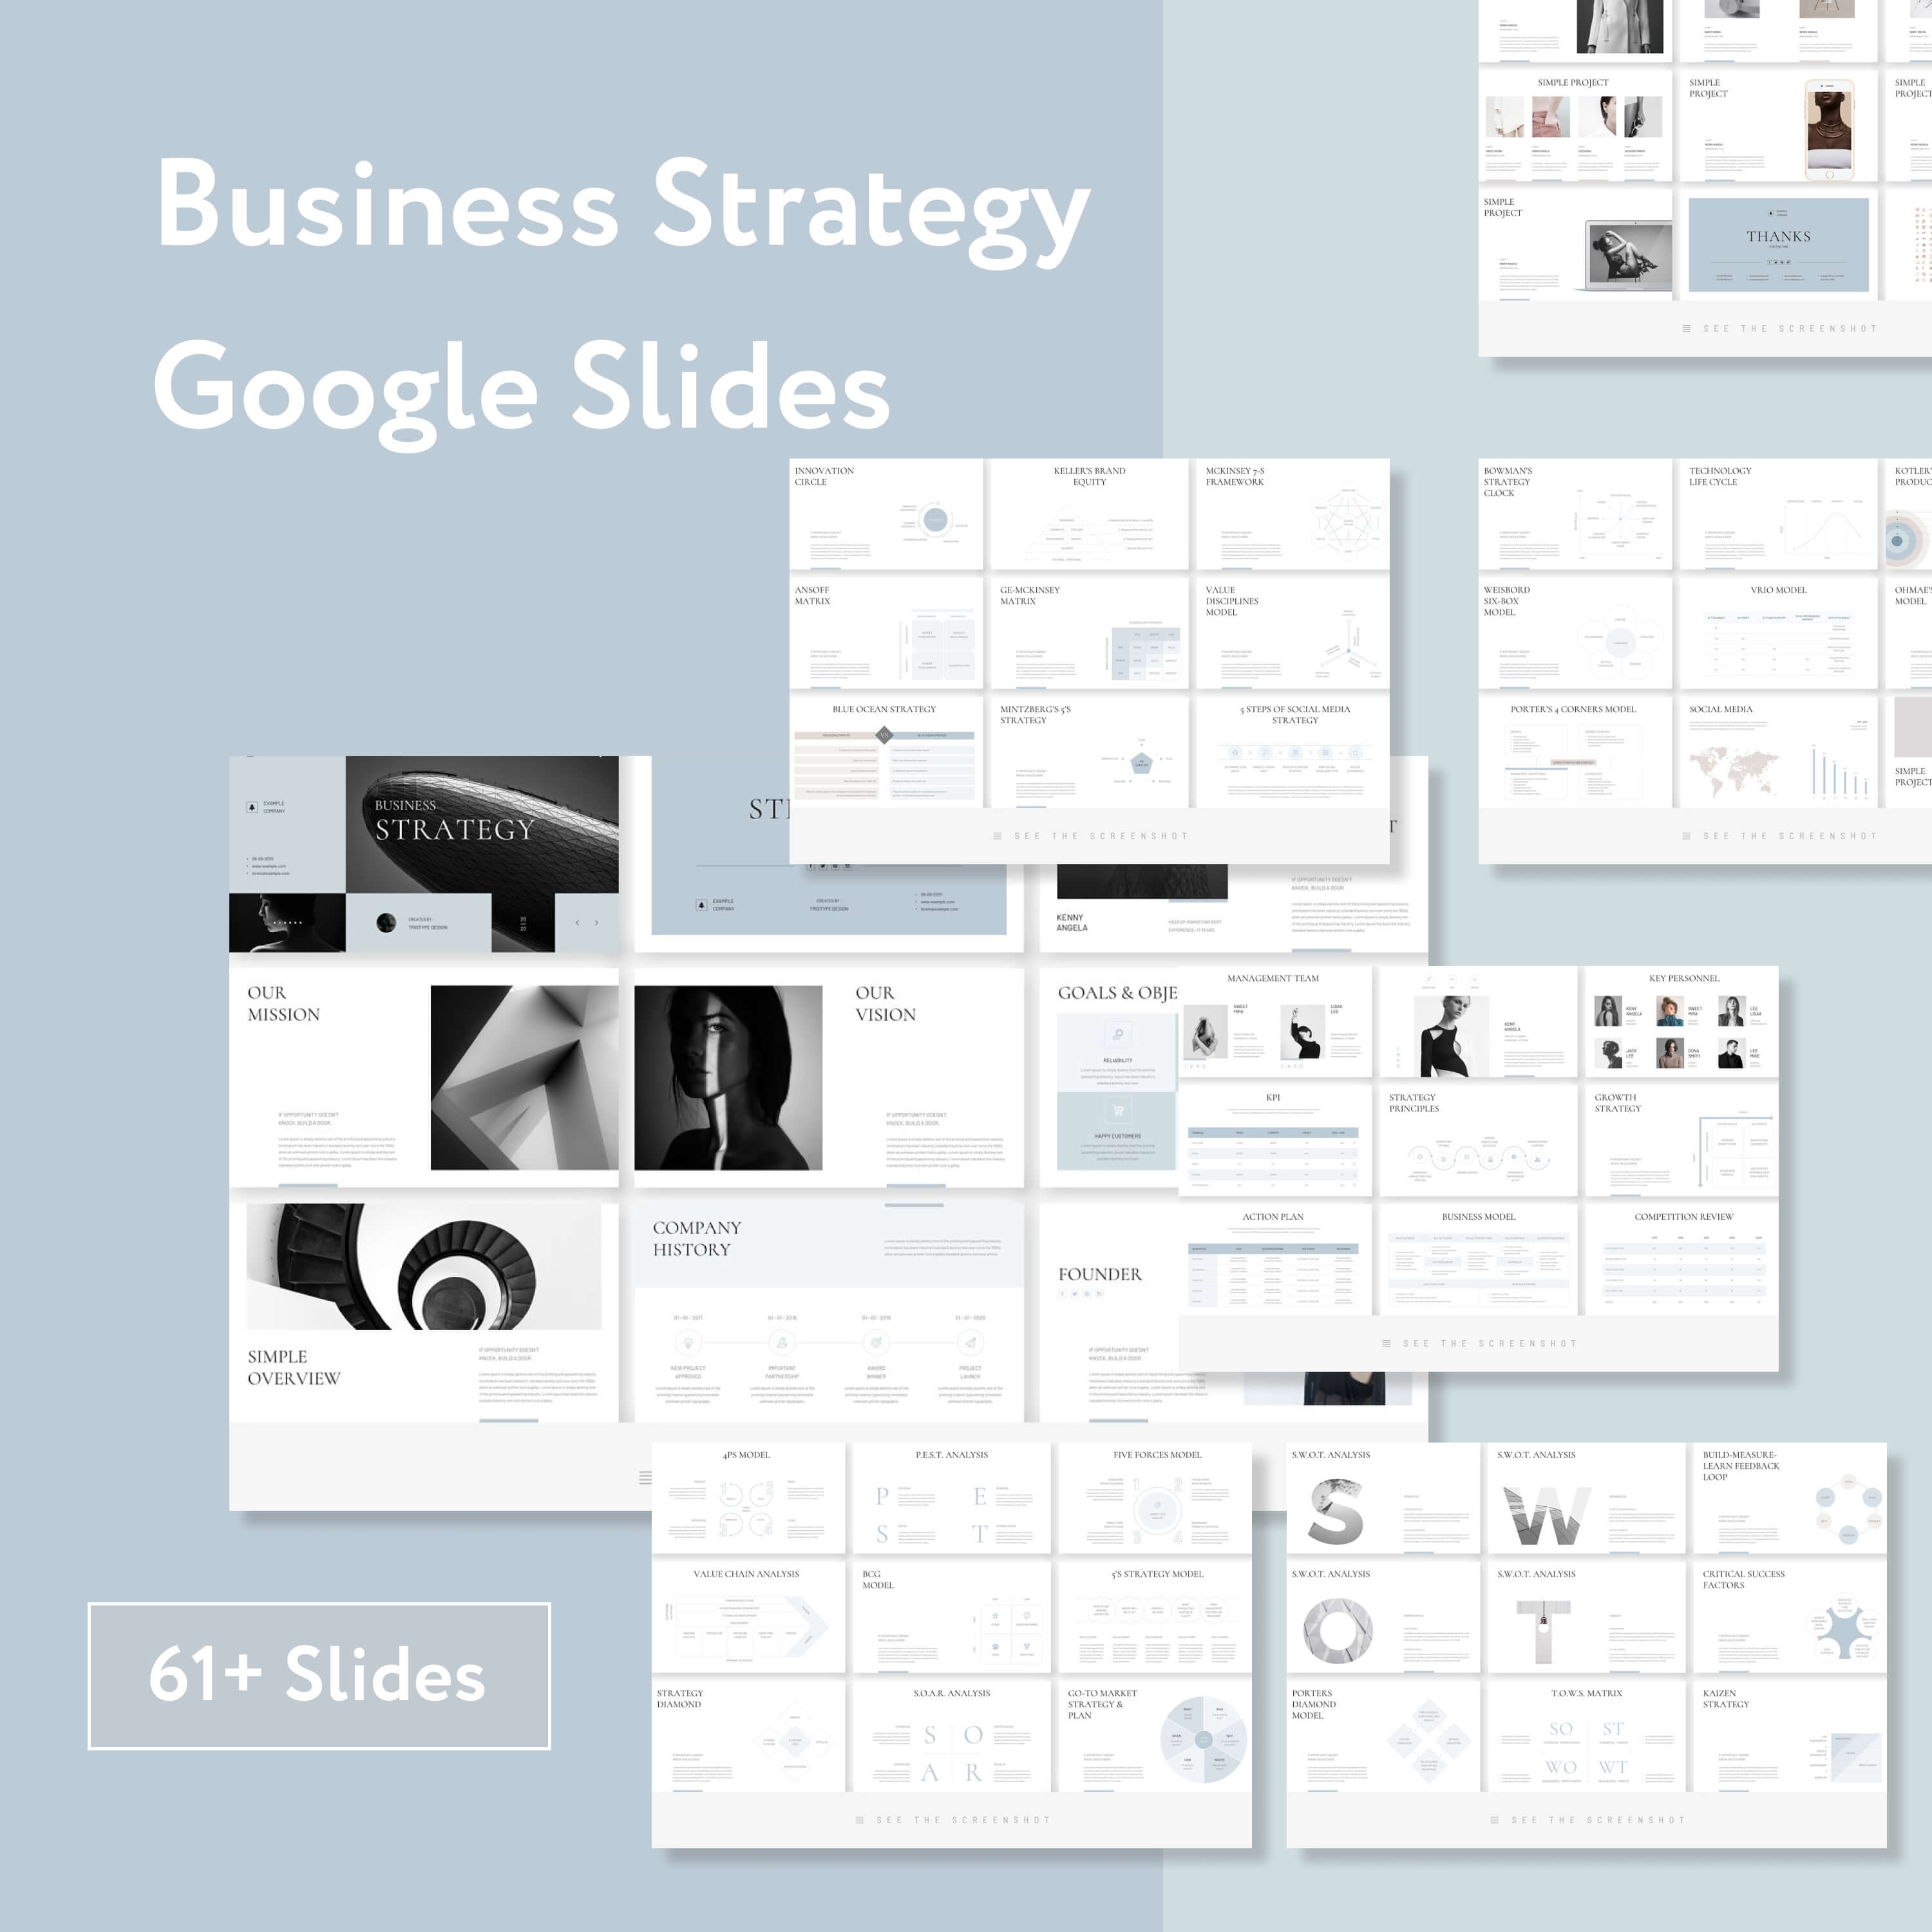 Business strategy google slides.